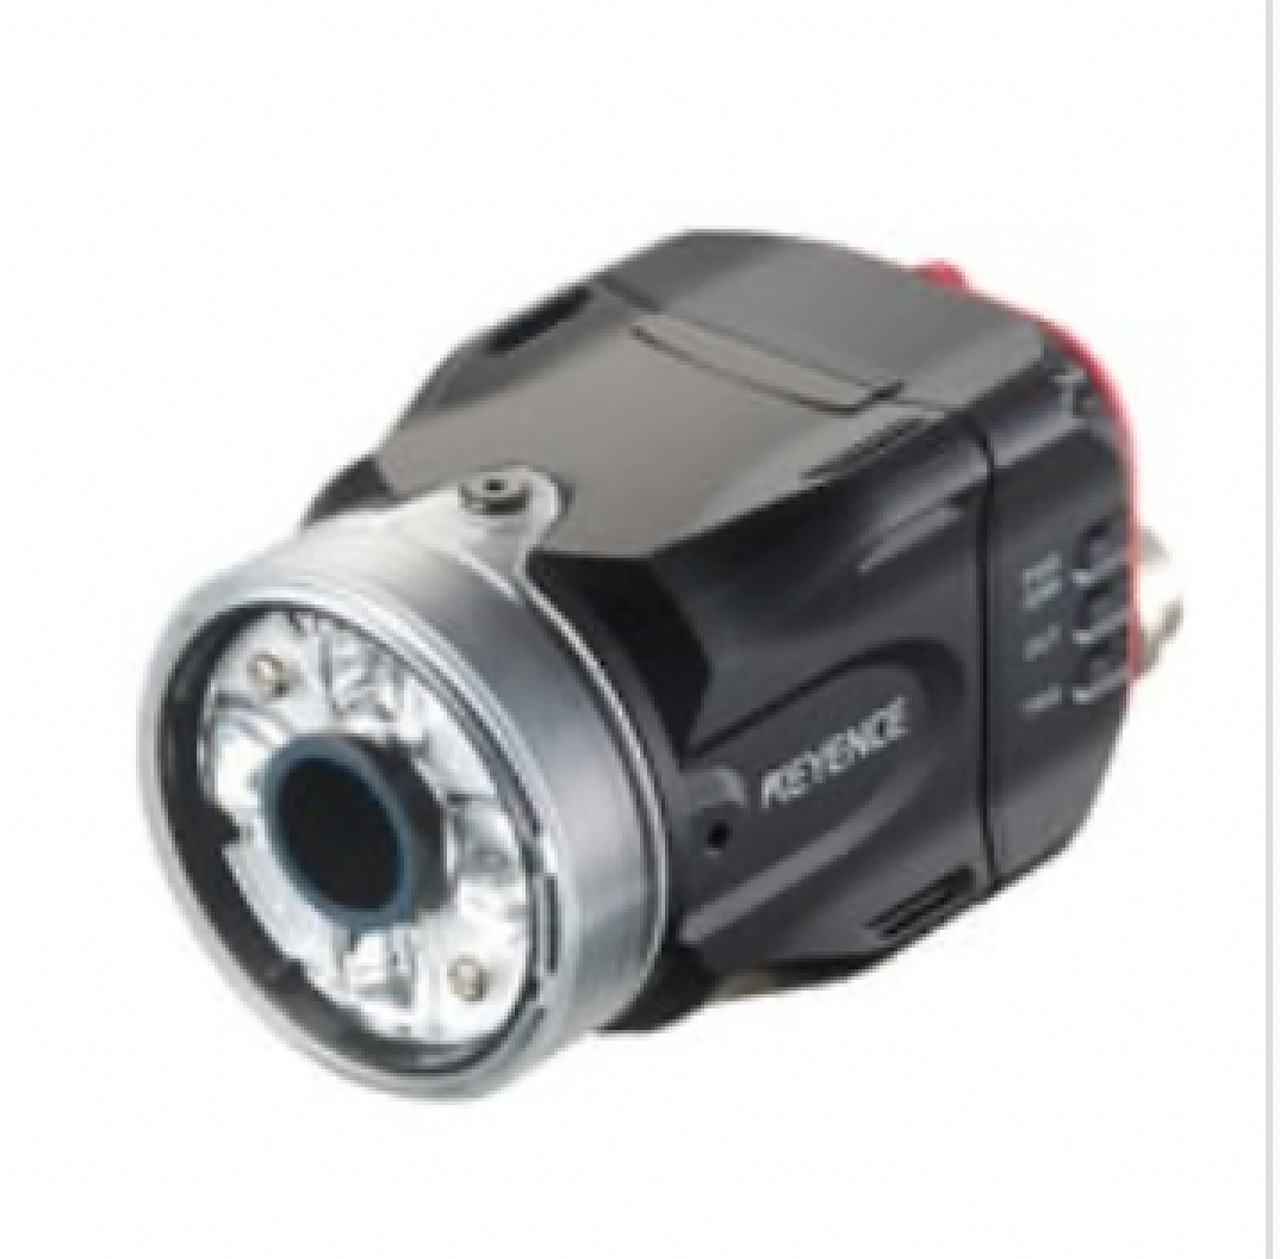 Keyence IV-500CA Vision Sensor, Standard Distance, Color, Automatic Focus Model [New]